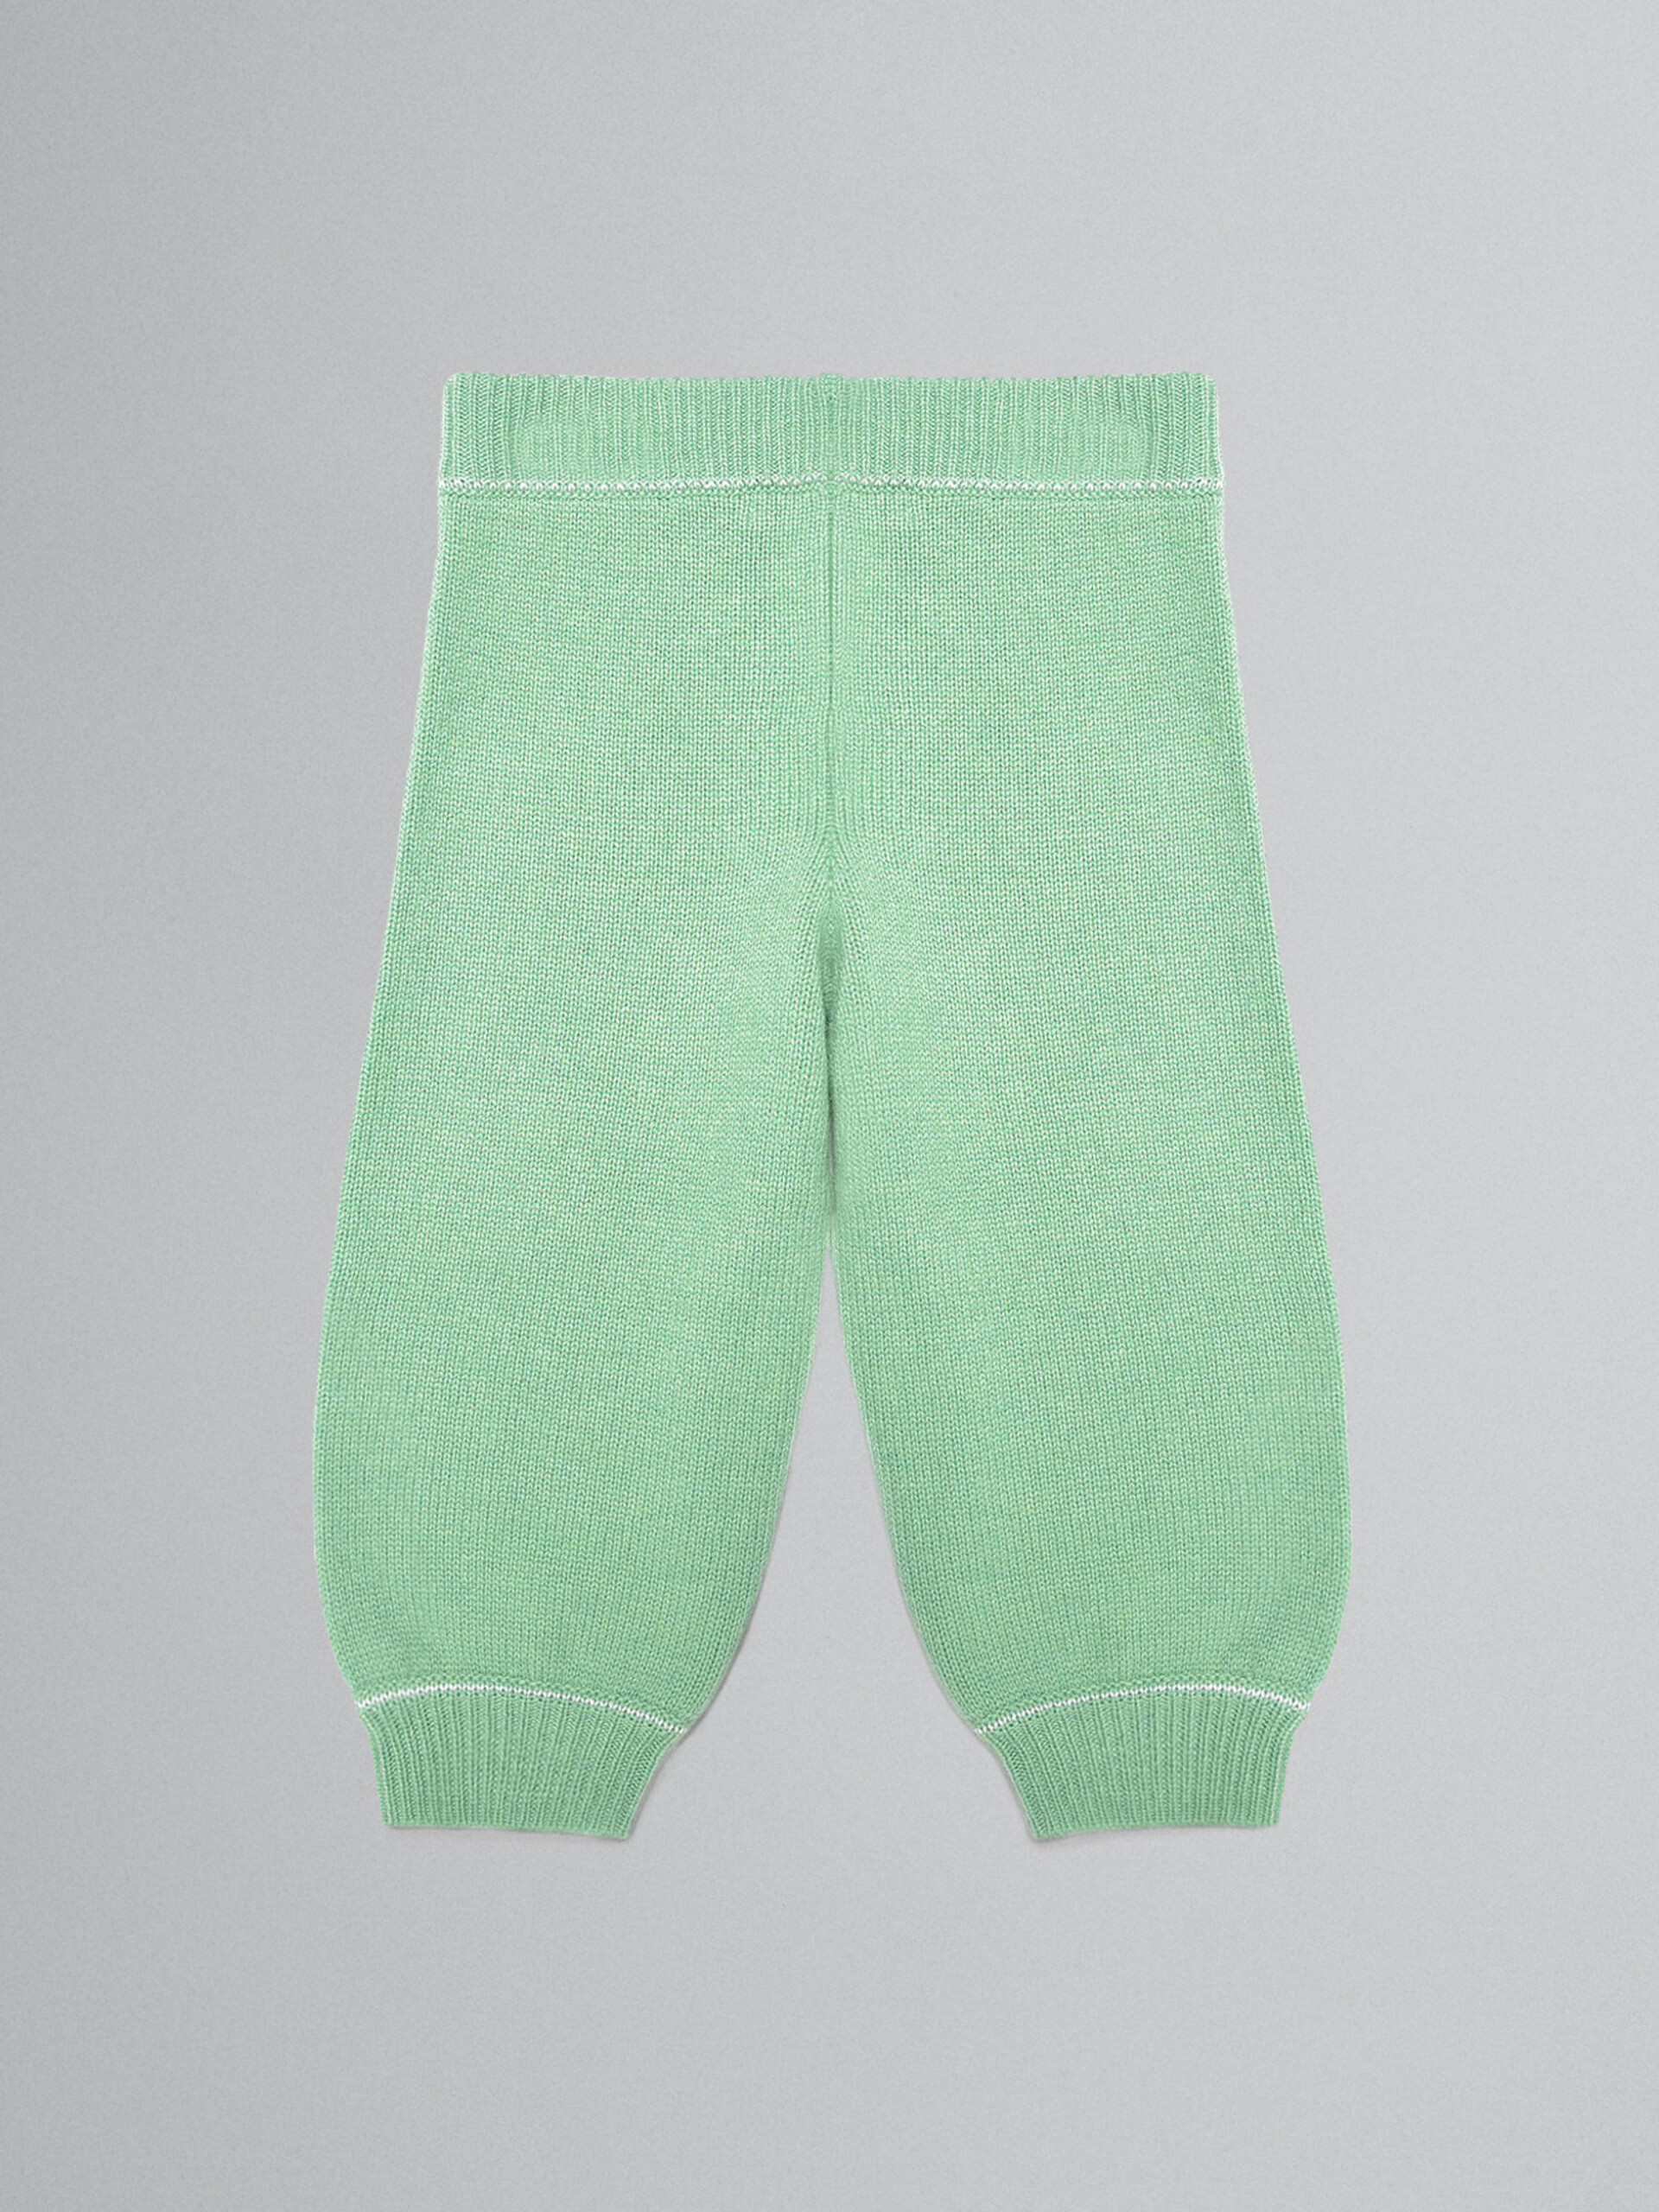 Green cashmere blend pants - Pants - Image 2